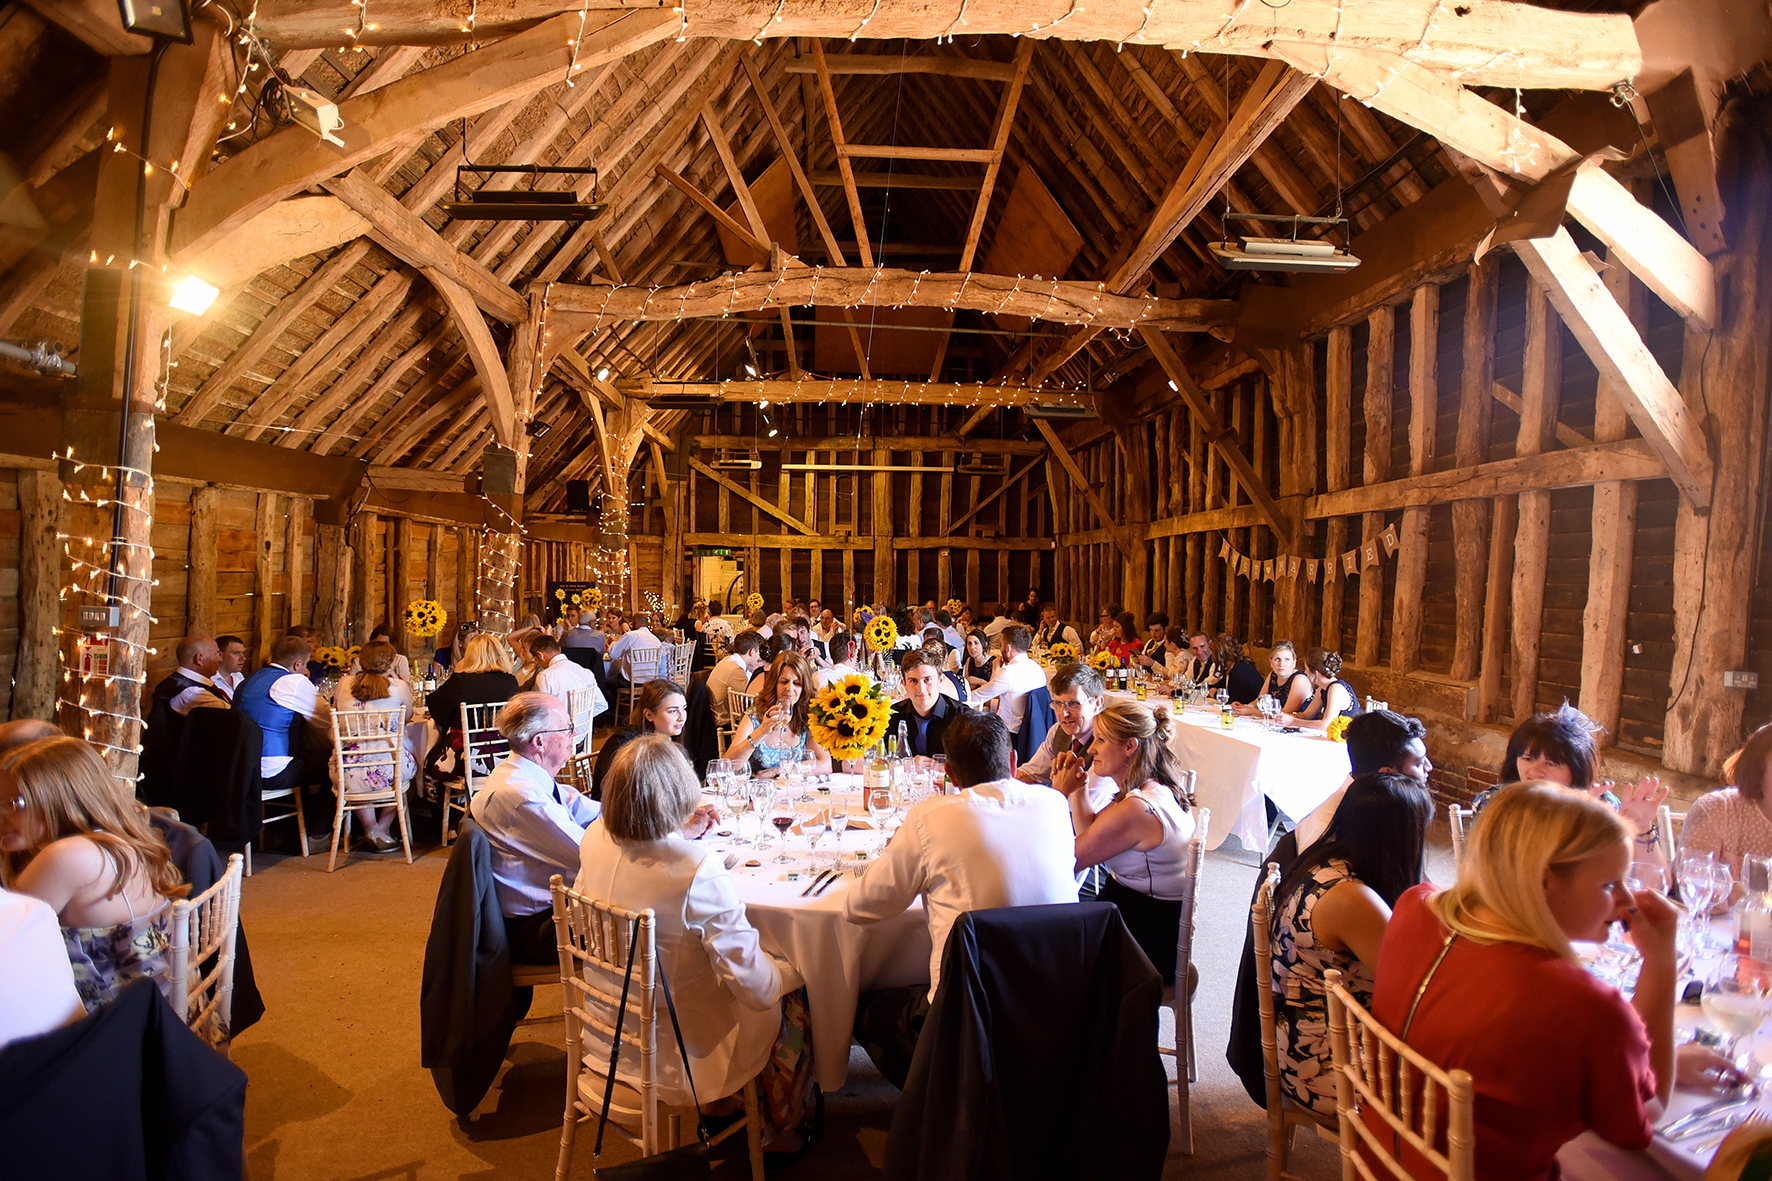 Blackthorpe Barn Wedding Venue, Suffolk - Wedding photography